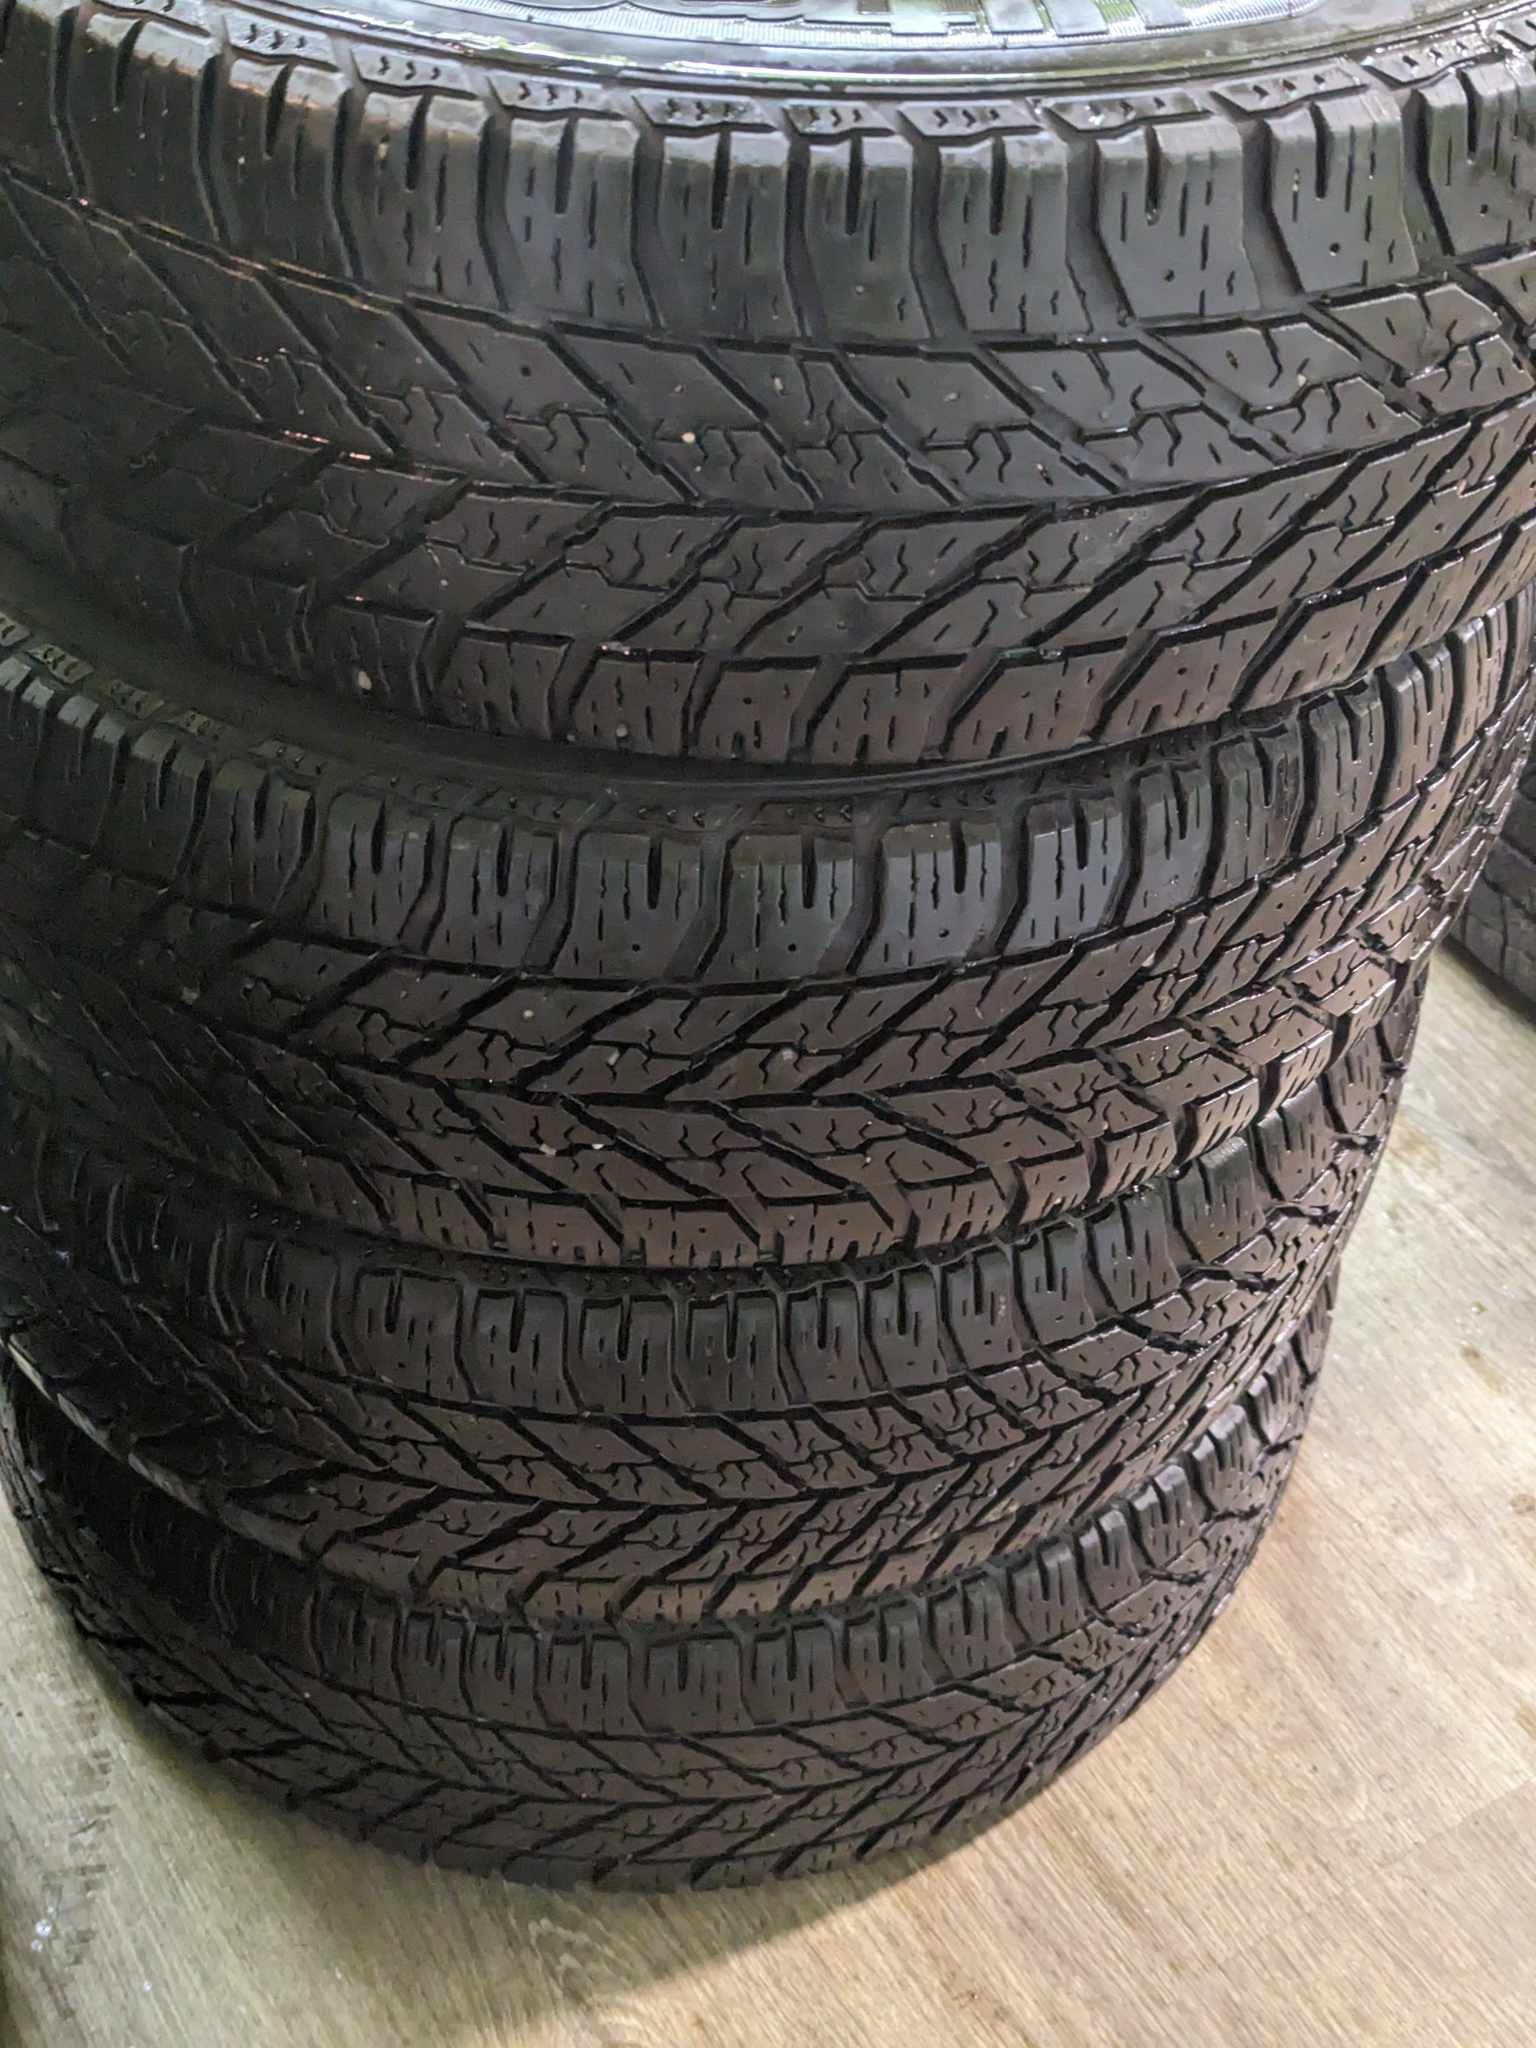 205/55R16 Good Year Snow Tires on Mitsubishi Rims